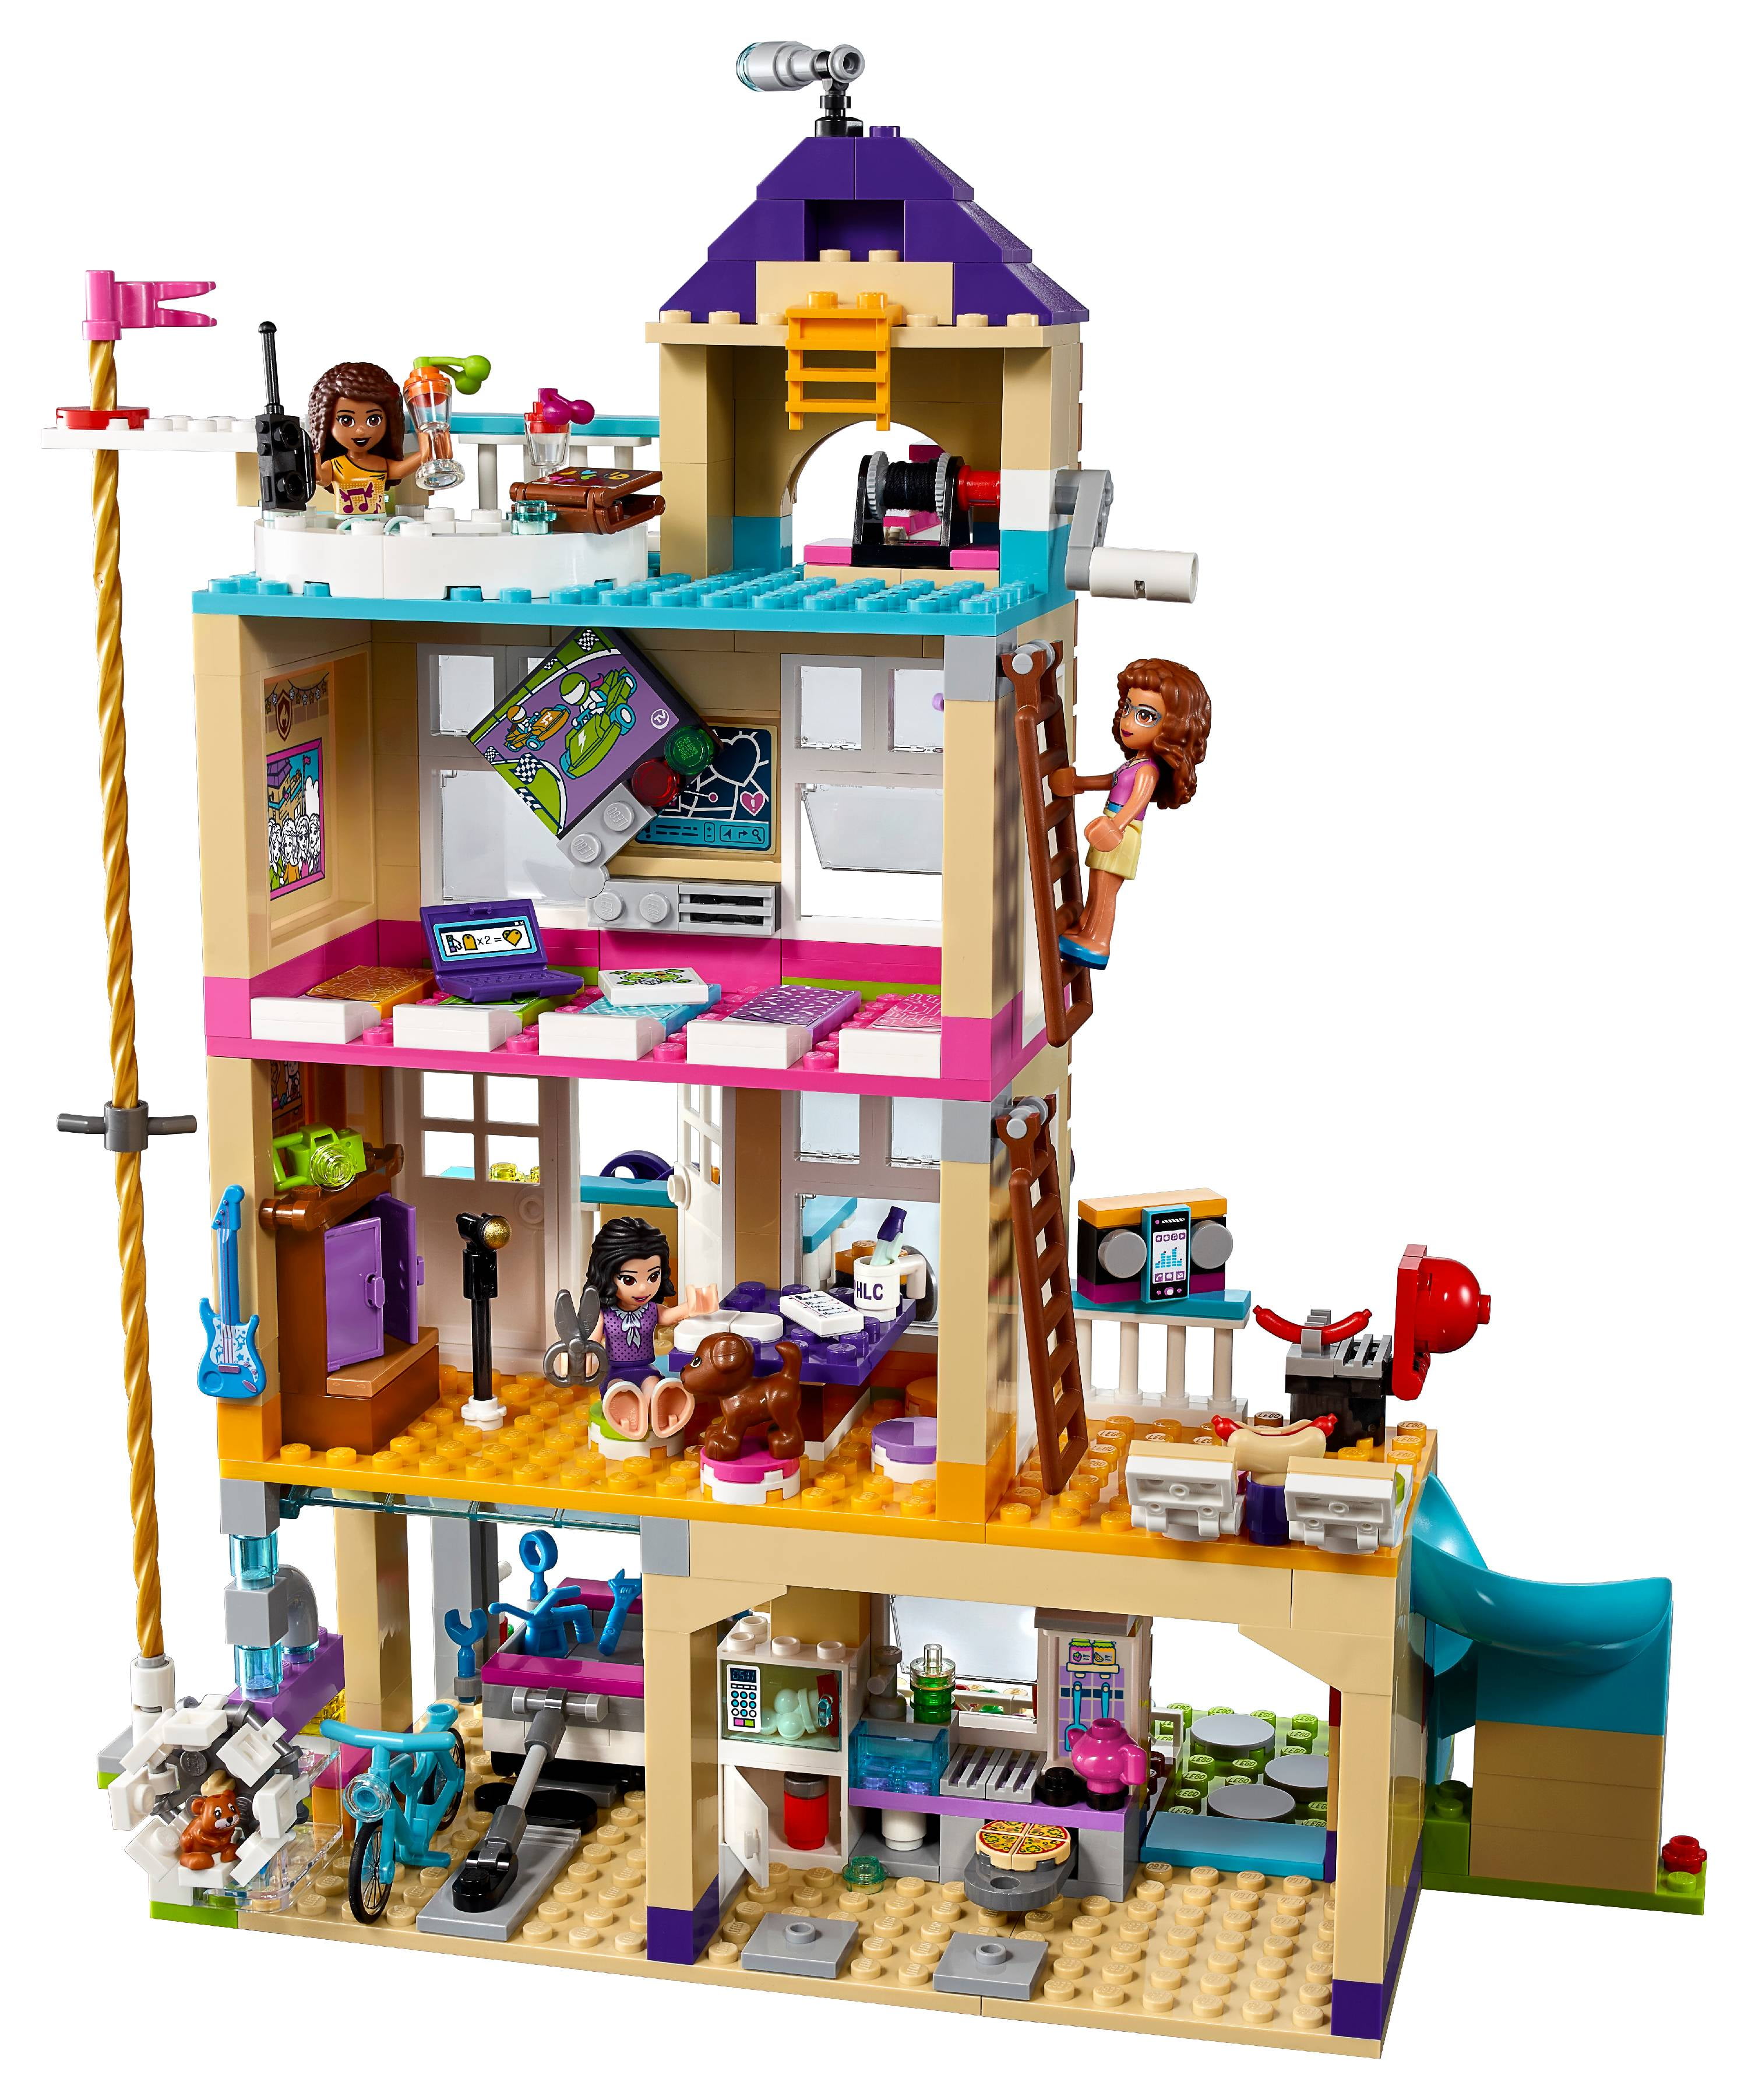 LEGO Friends Friendship House 41340 4-Story Building Set (722 - Walmart.com